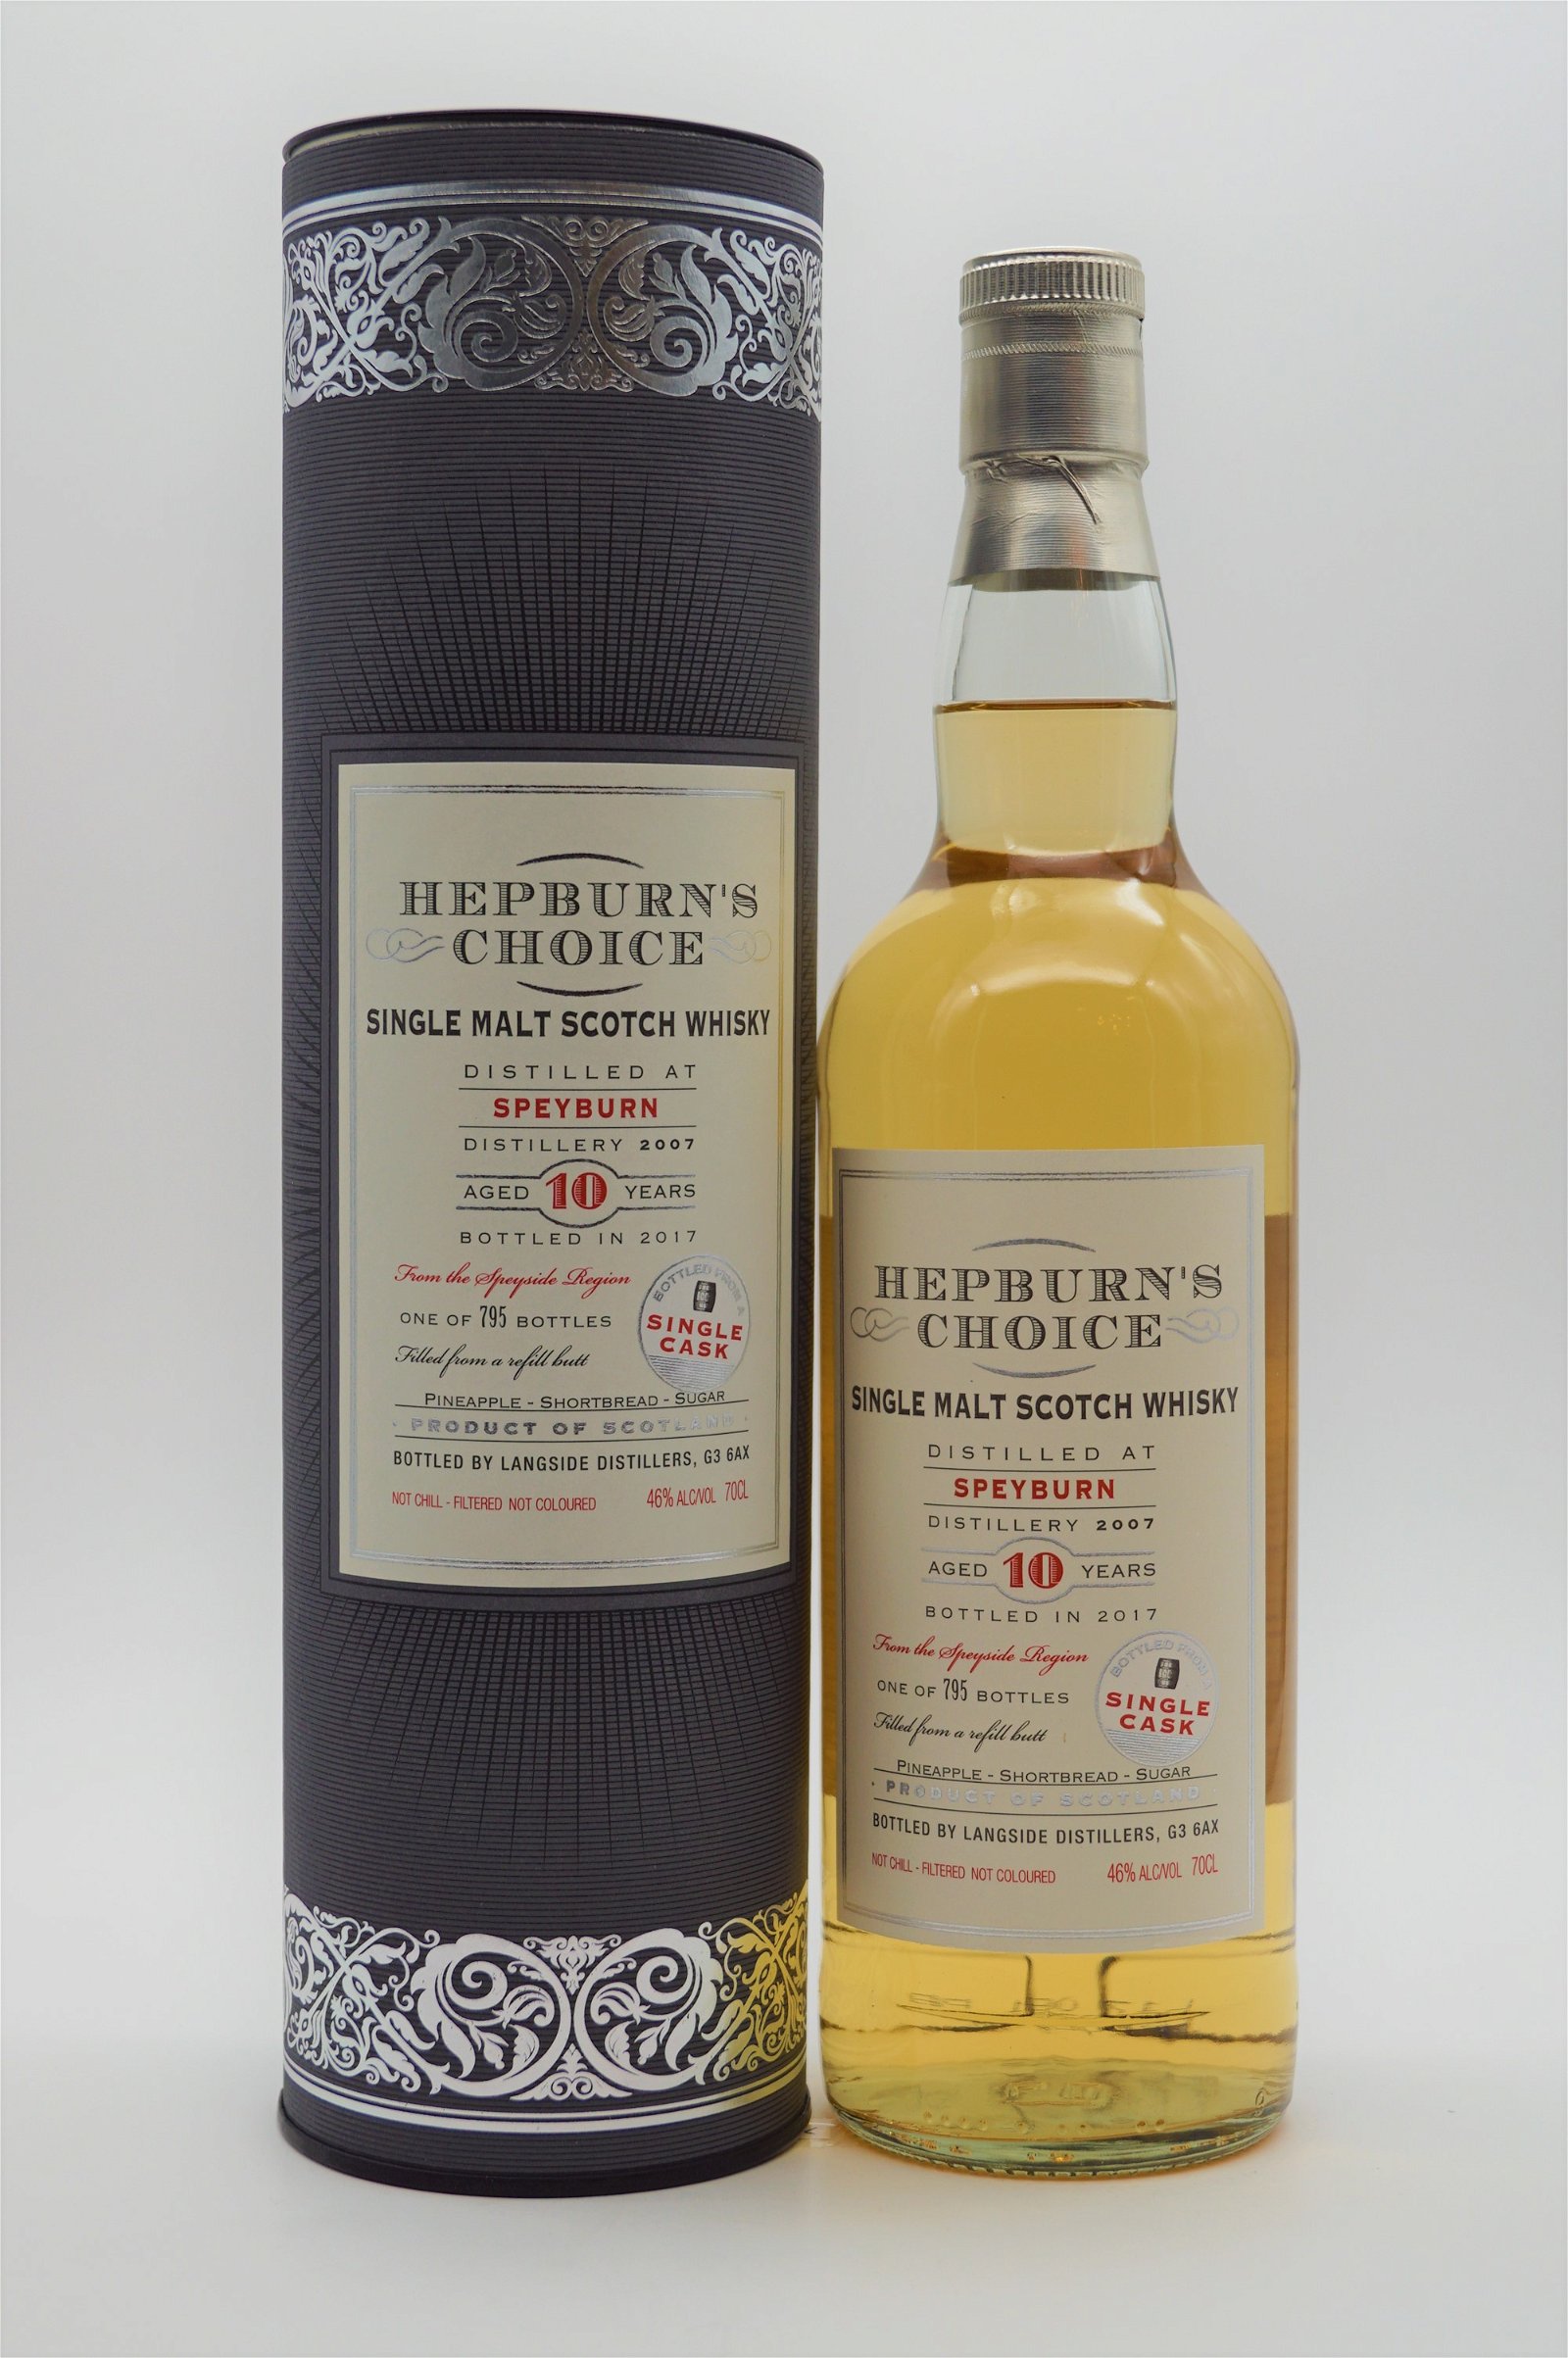 Hepburns Choice Speyburn 10 Jahre 2007/2017 - 795 Fl. Single Malt Scotch